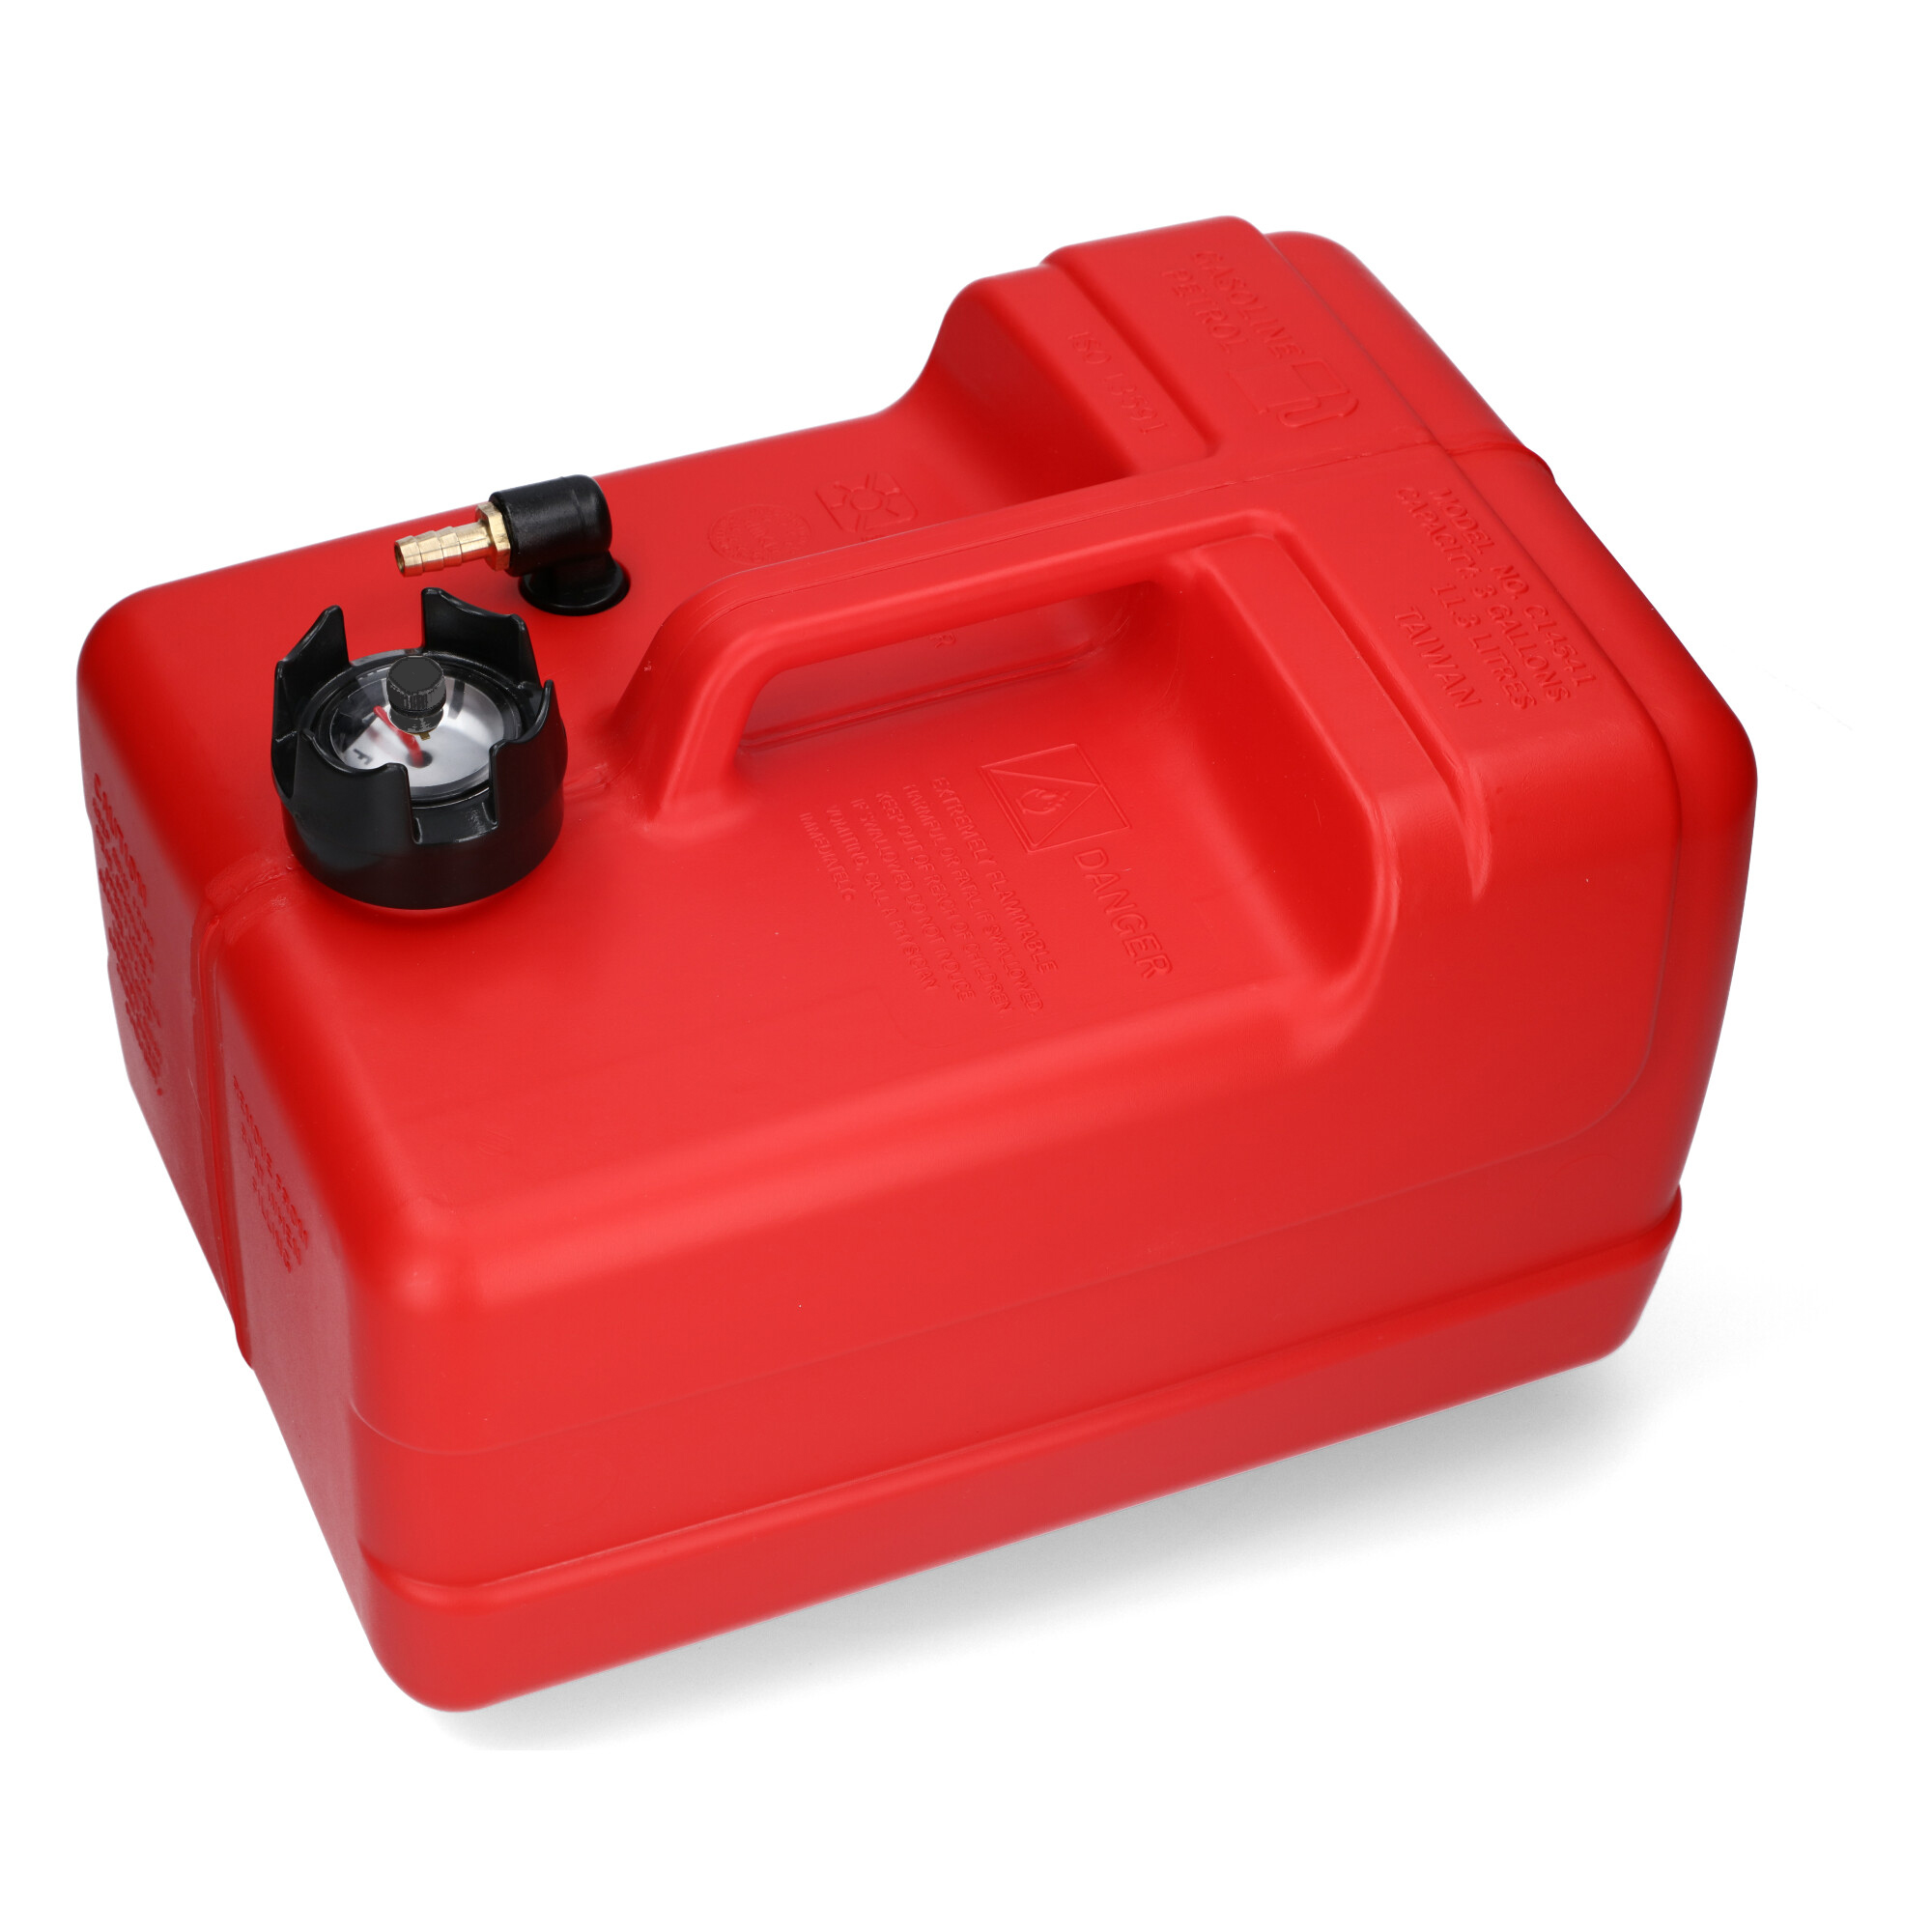 Kraftstofftank rot mit Nippel (10mm) Anschluss / Füllstandsanzeige manuell